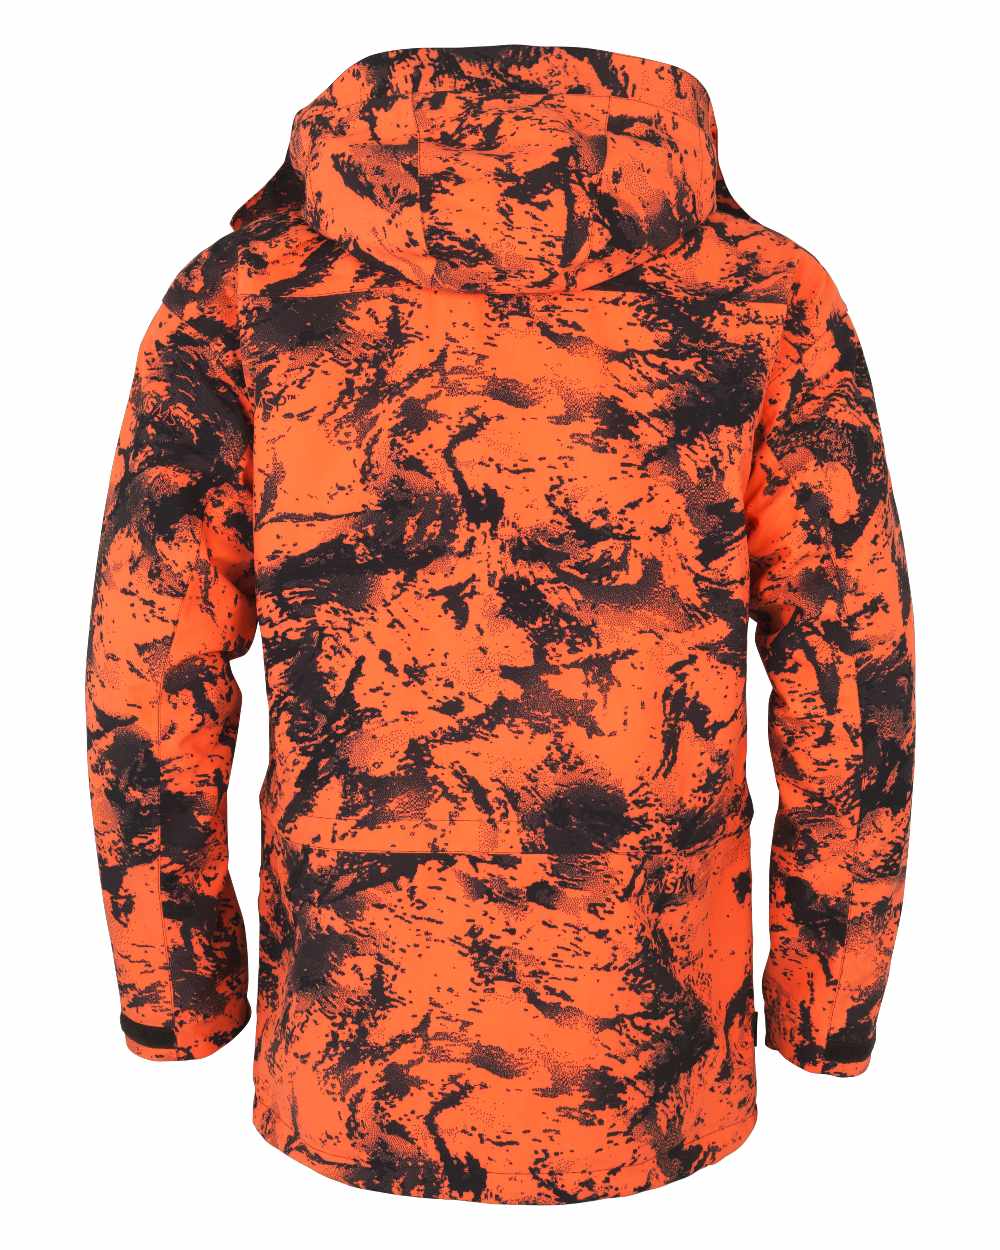 Axis Orange Blaze Coloured Harkila Wildboar Pro HWS Insulated Jacket on white background 